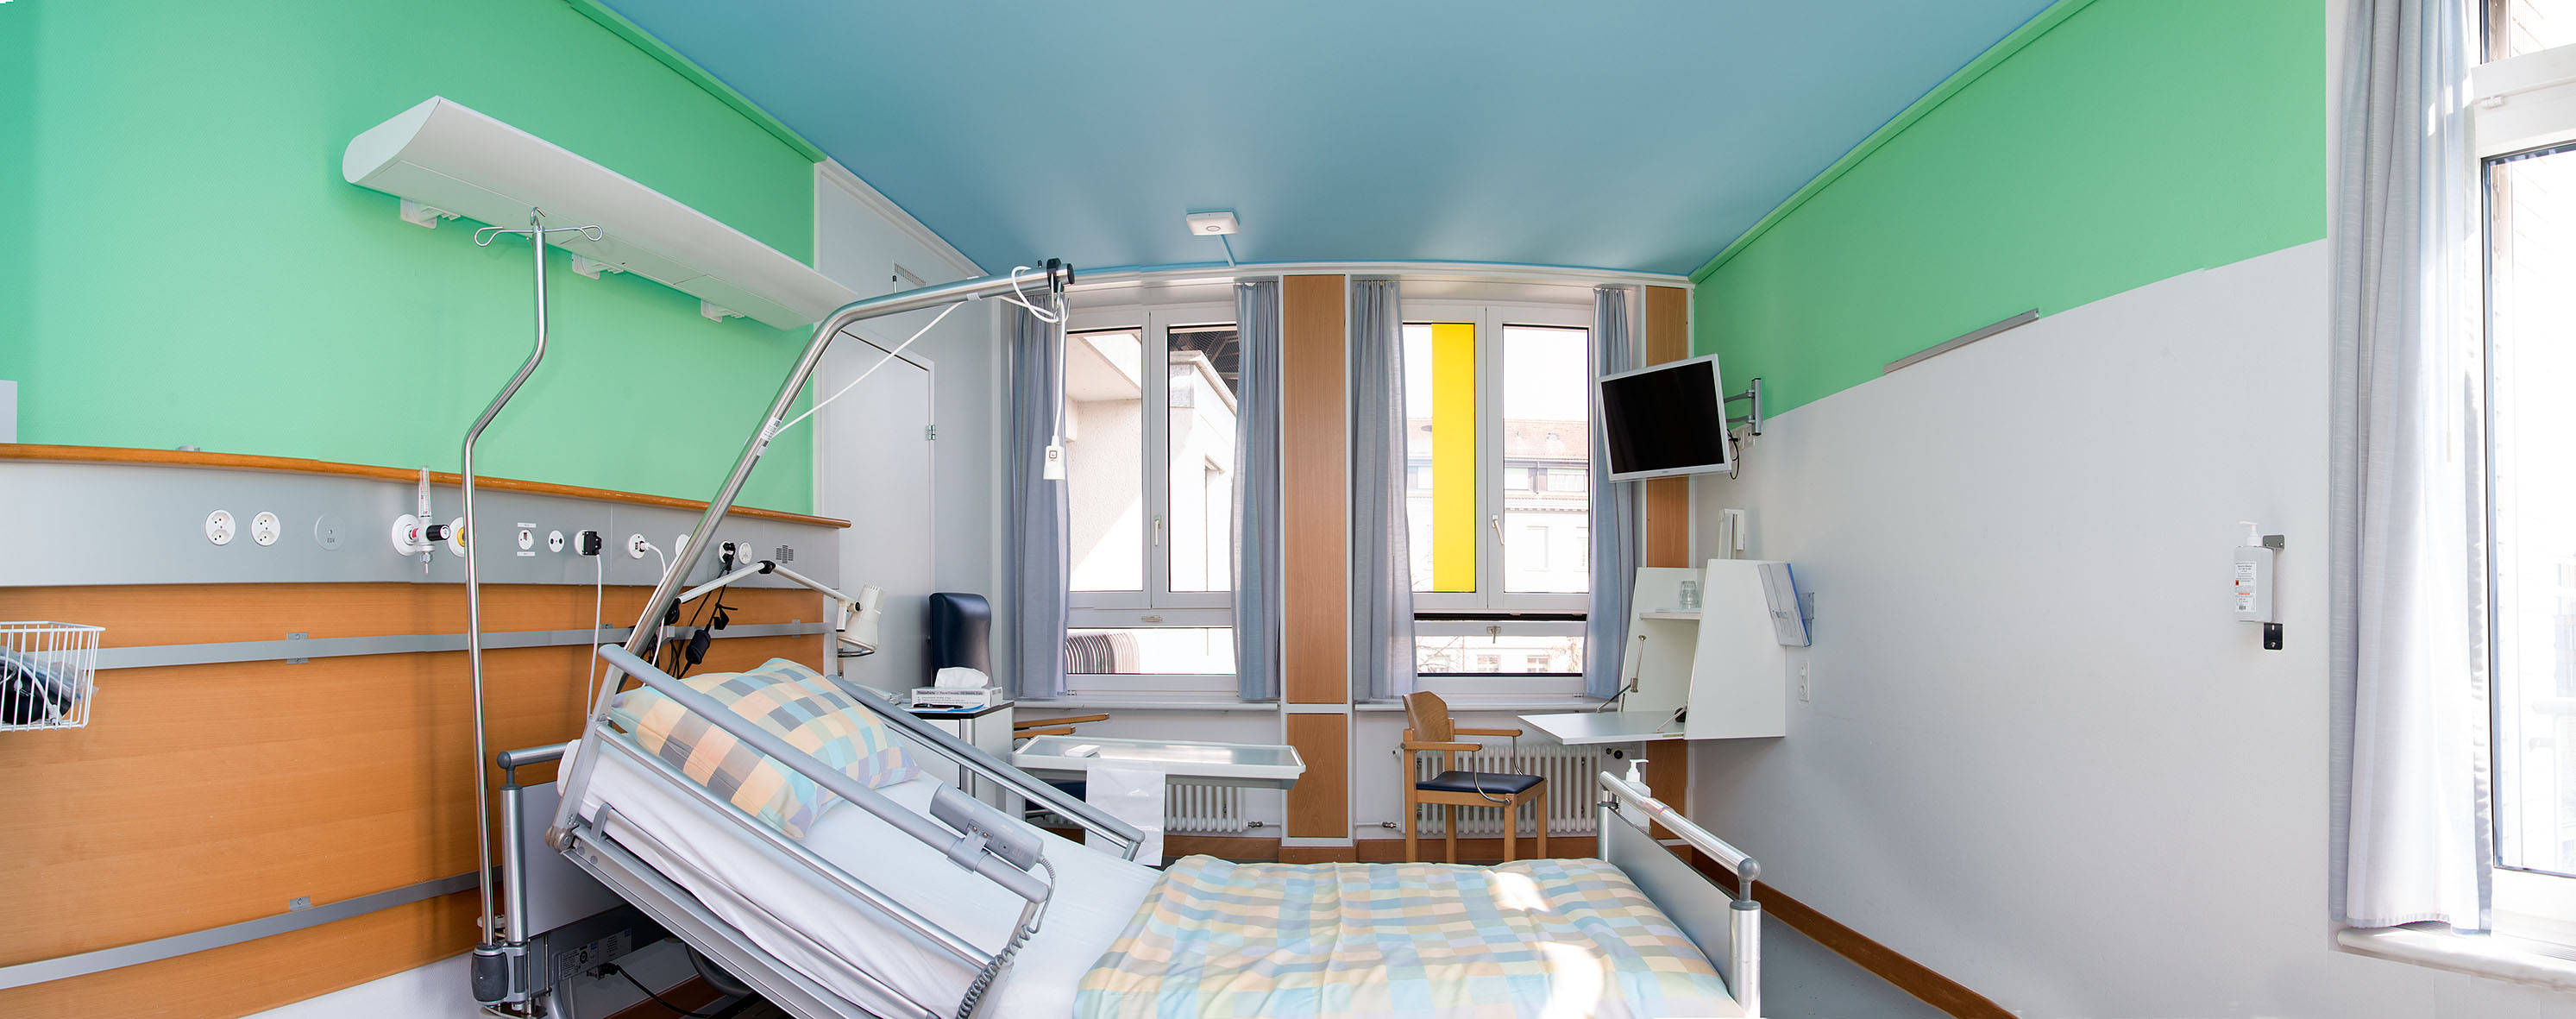 Patientenzimmer Honegger Design